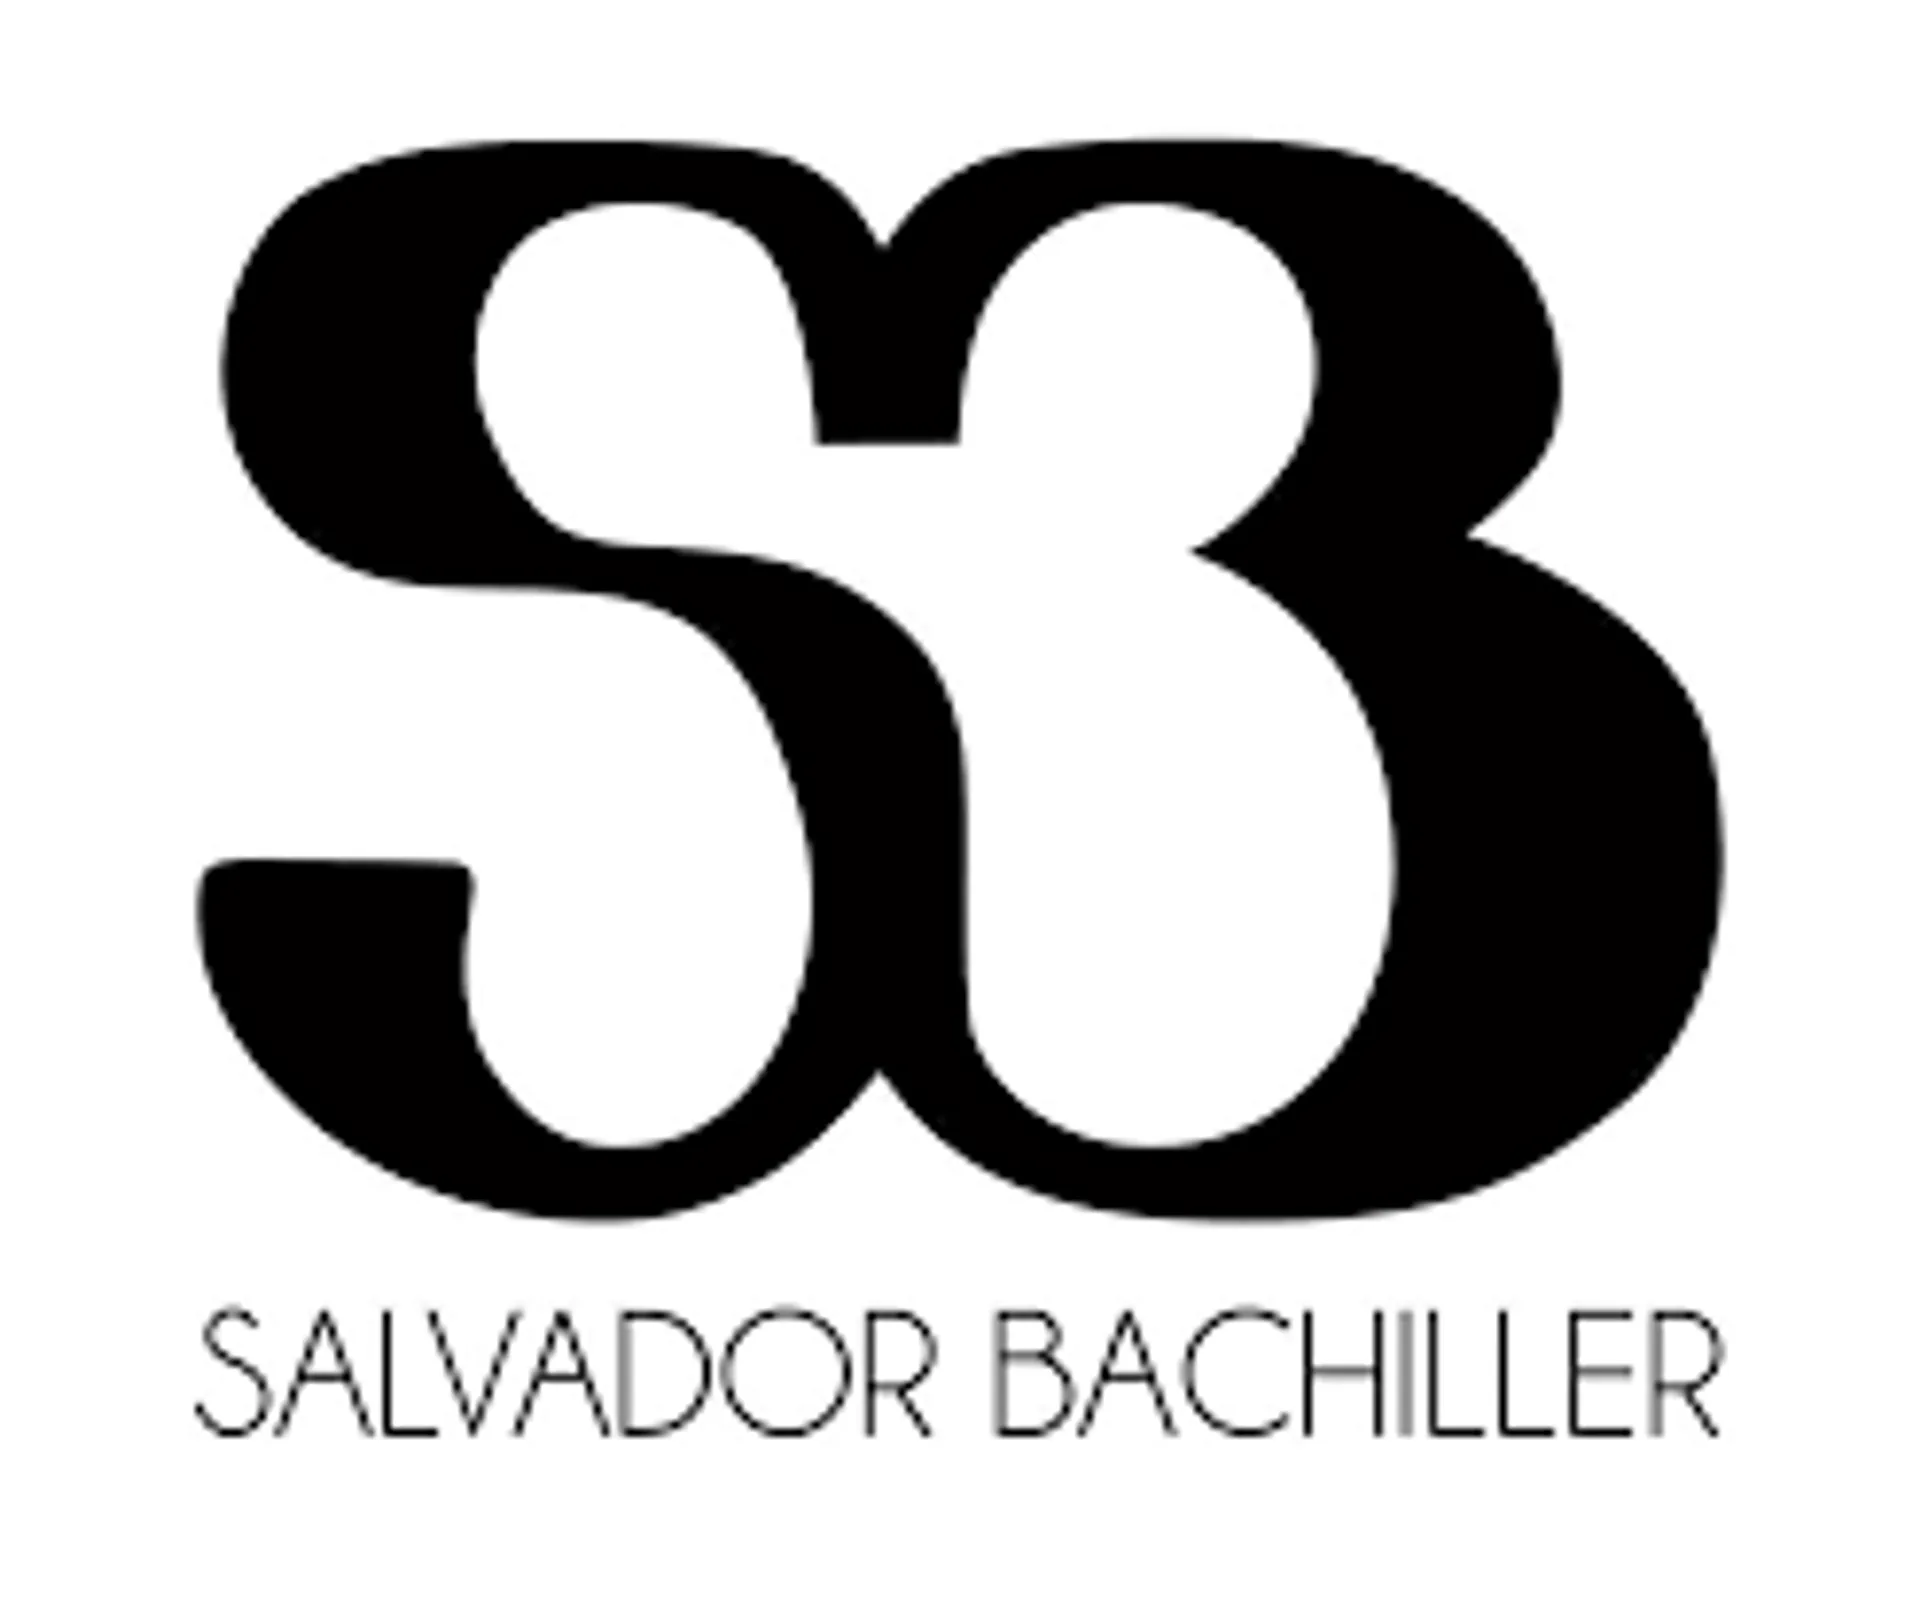 SALVADOR BACHILLER logo de catálogo